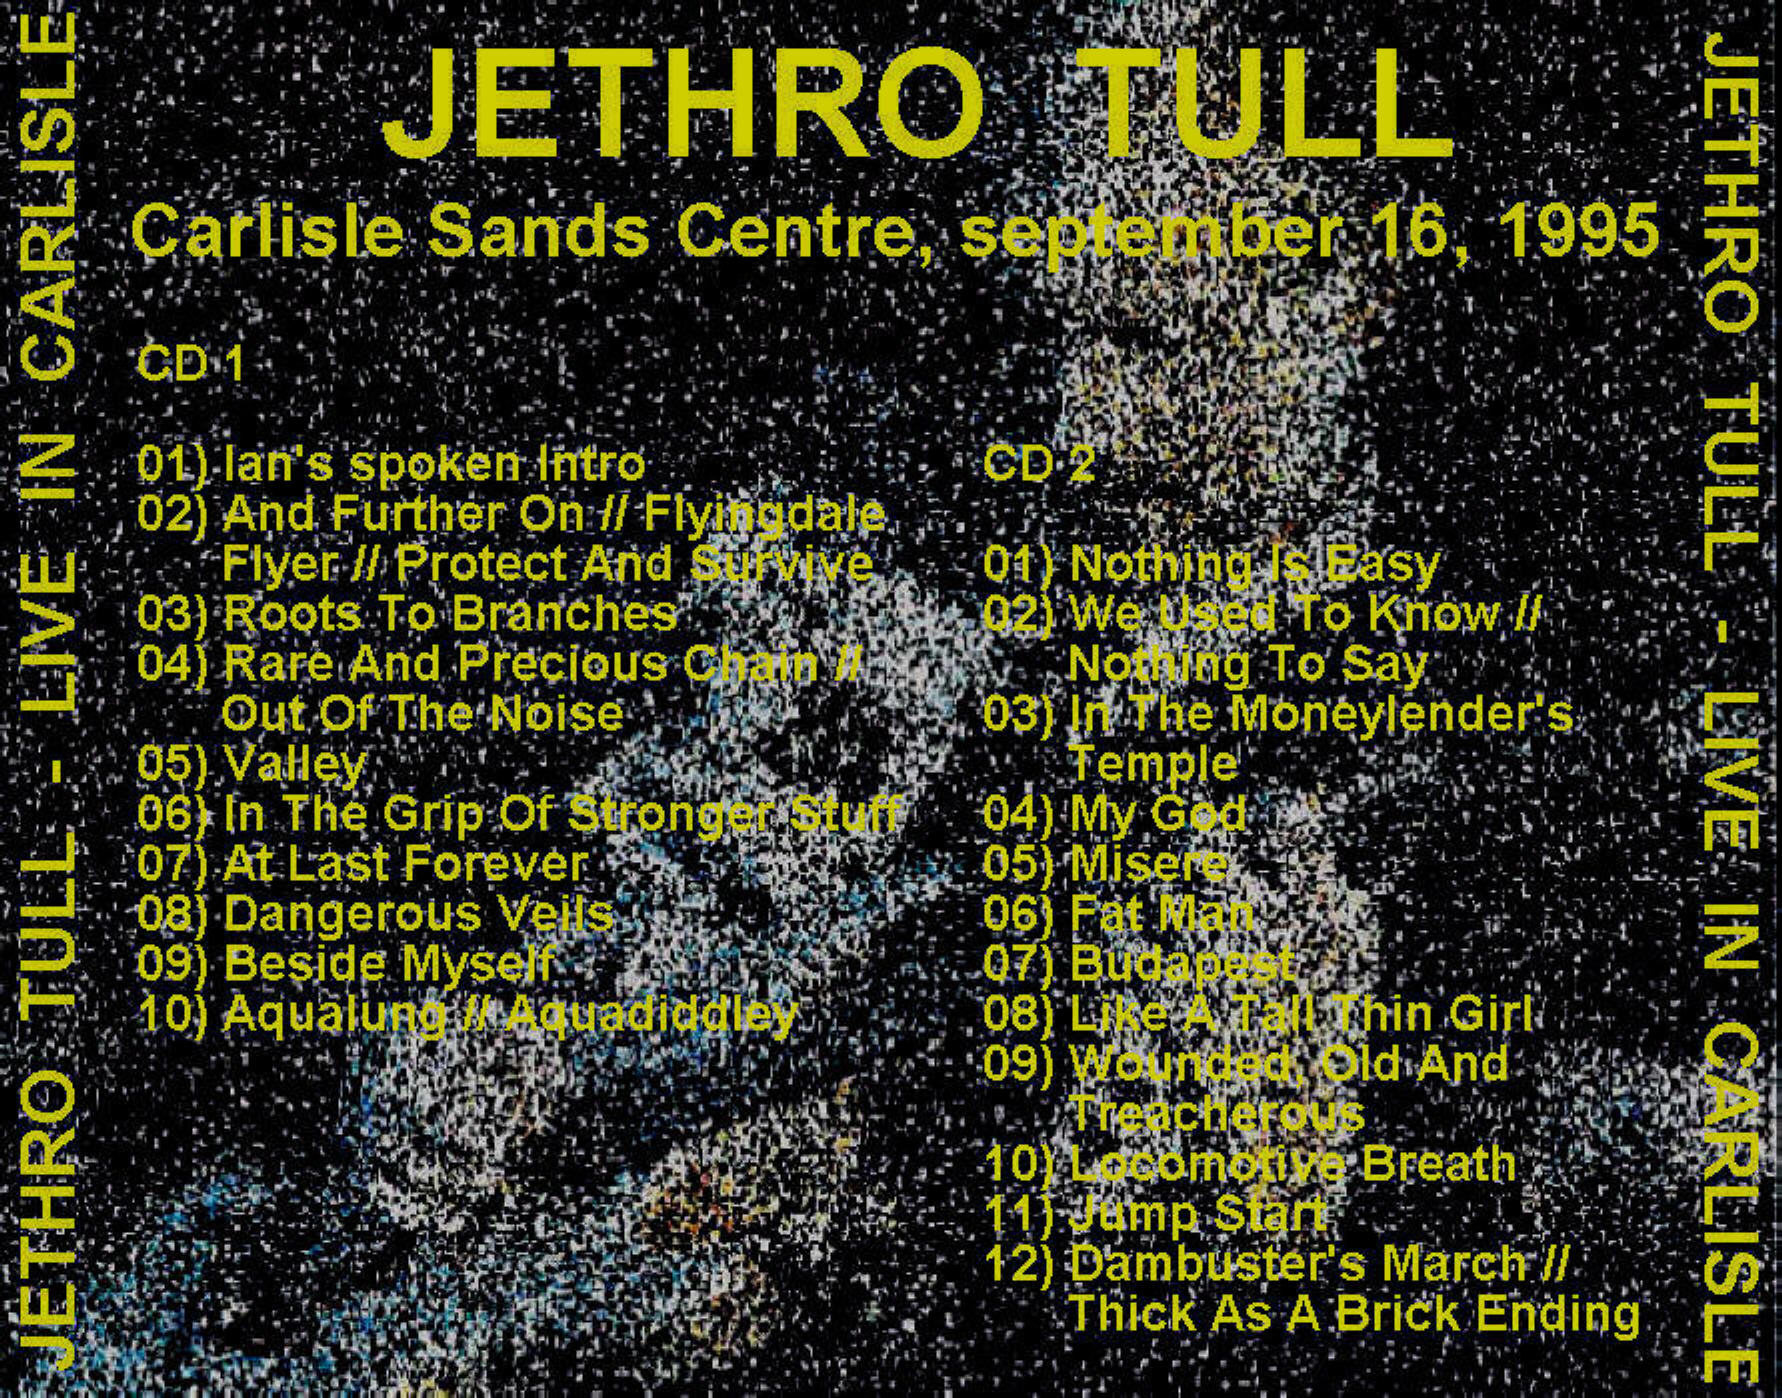 JethroTull1995-09-16SandsTheatreCarlisleUK (1).jpg